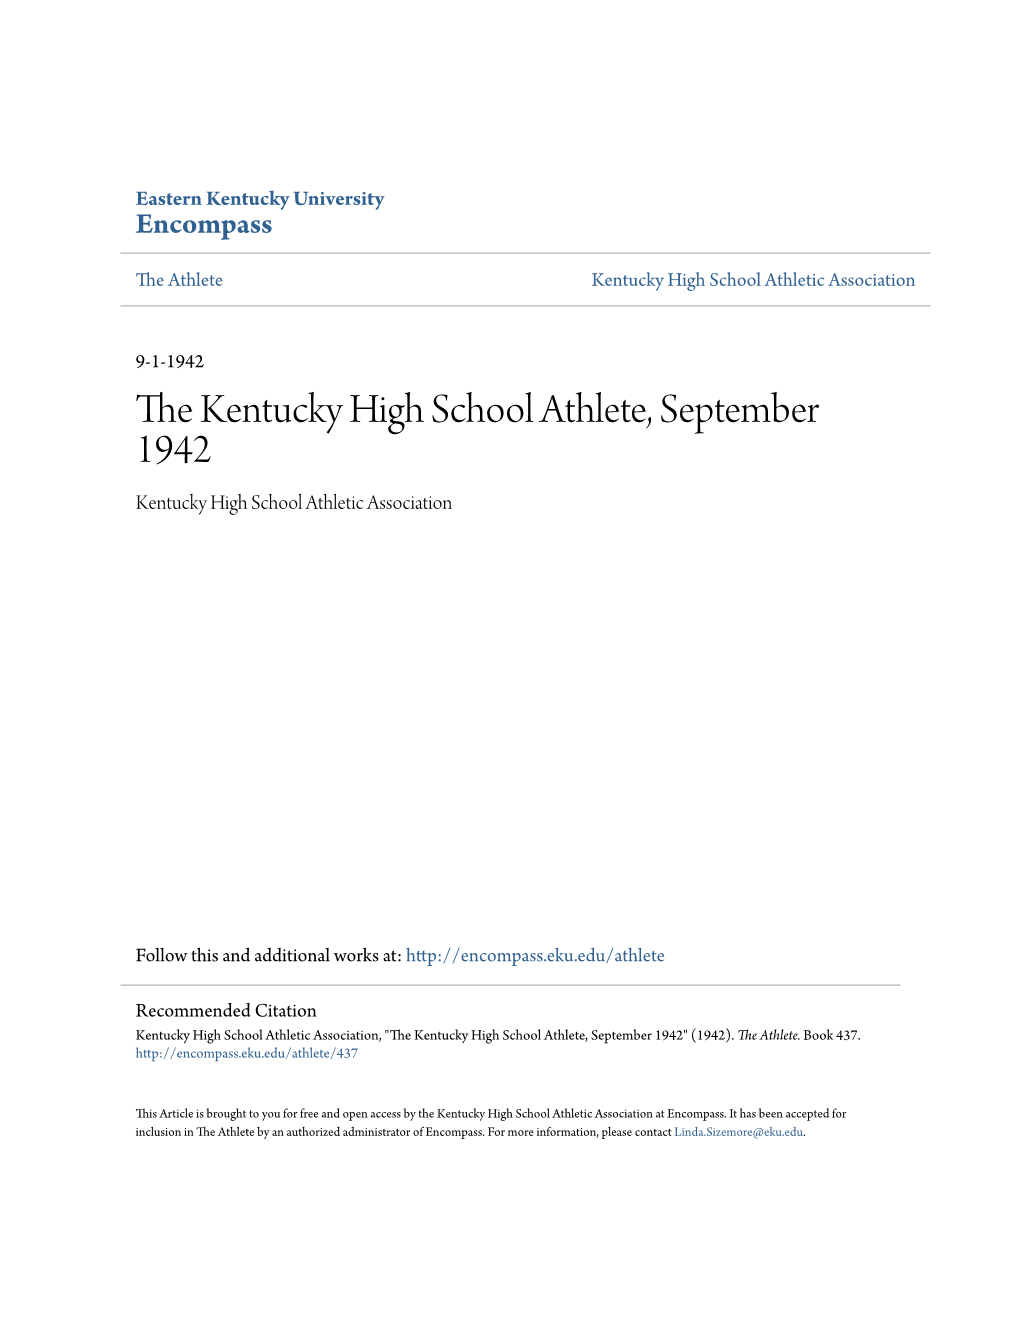 The Kentucky High School Athlete, September 1942 Kentucky High School Athletic Association